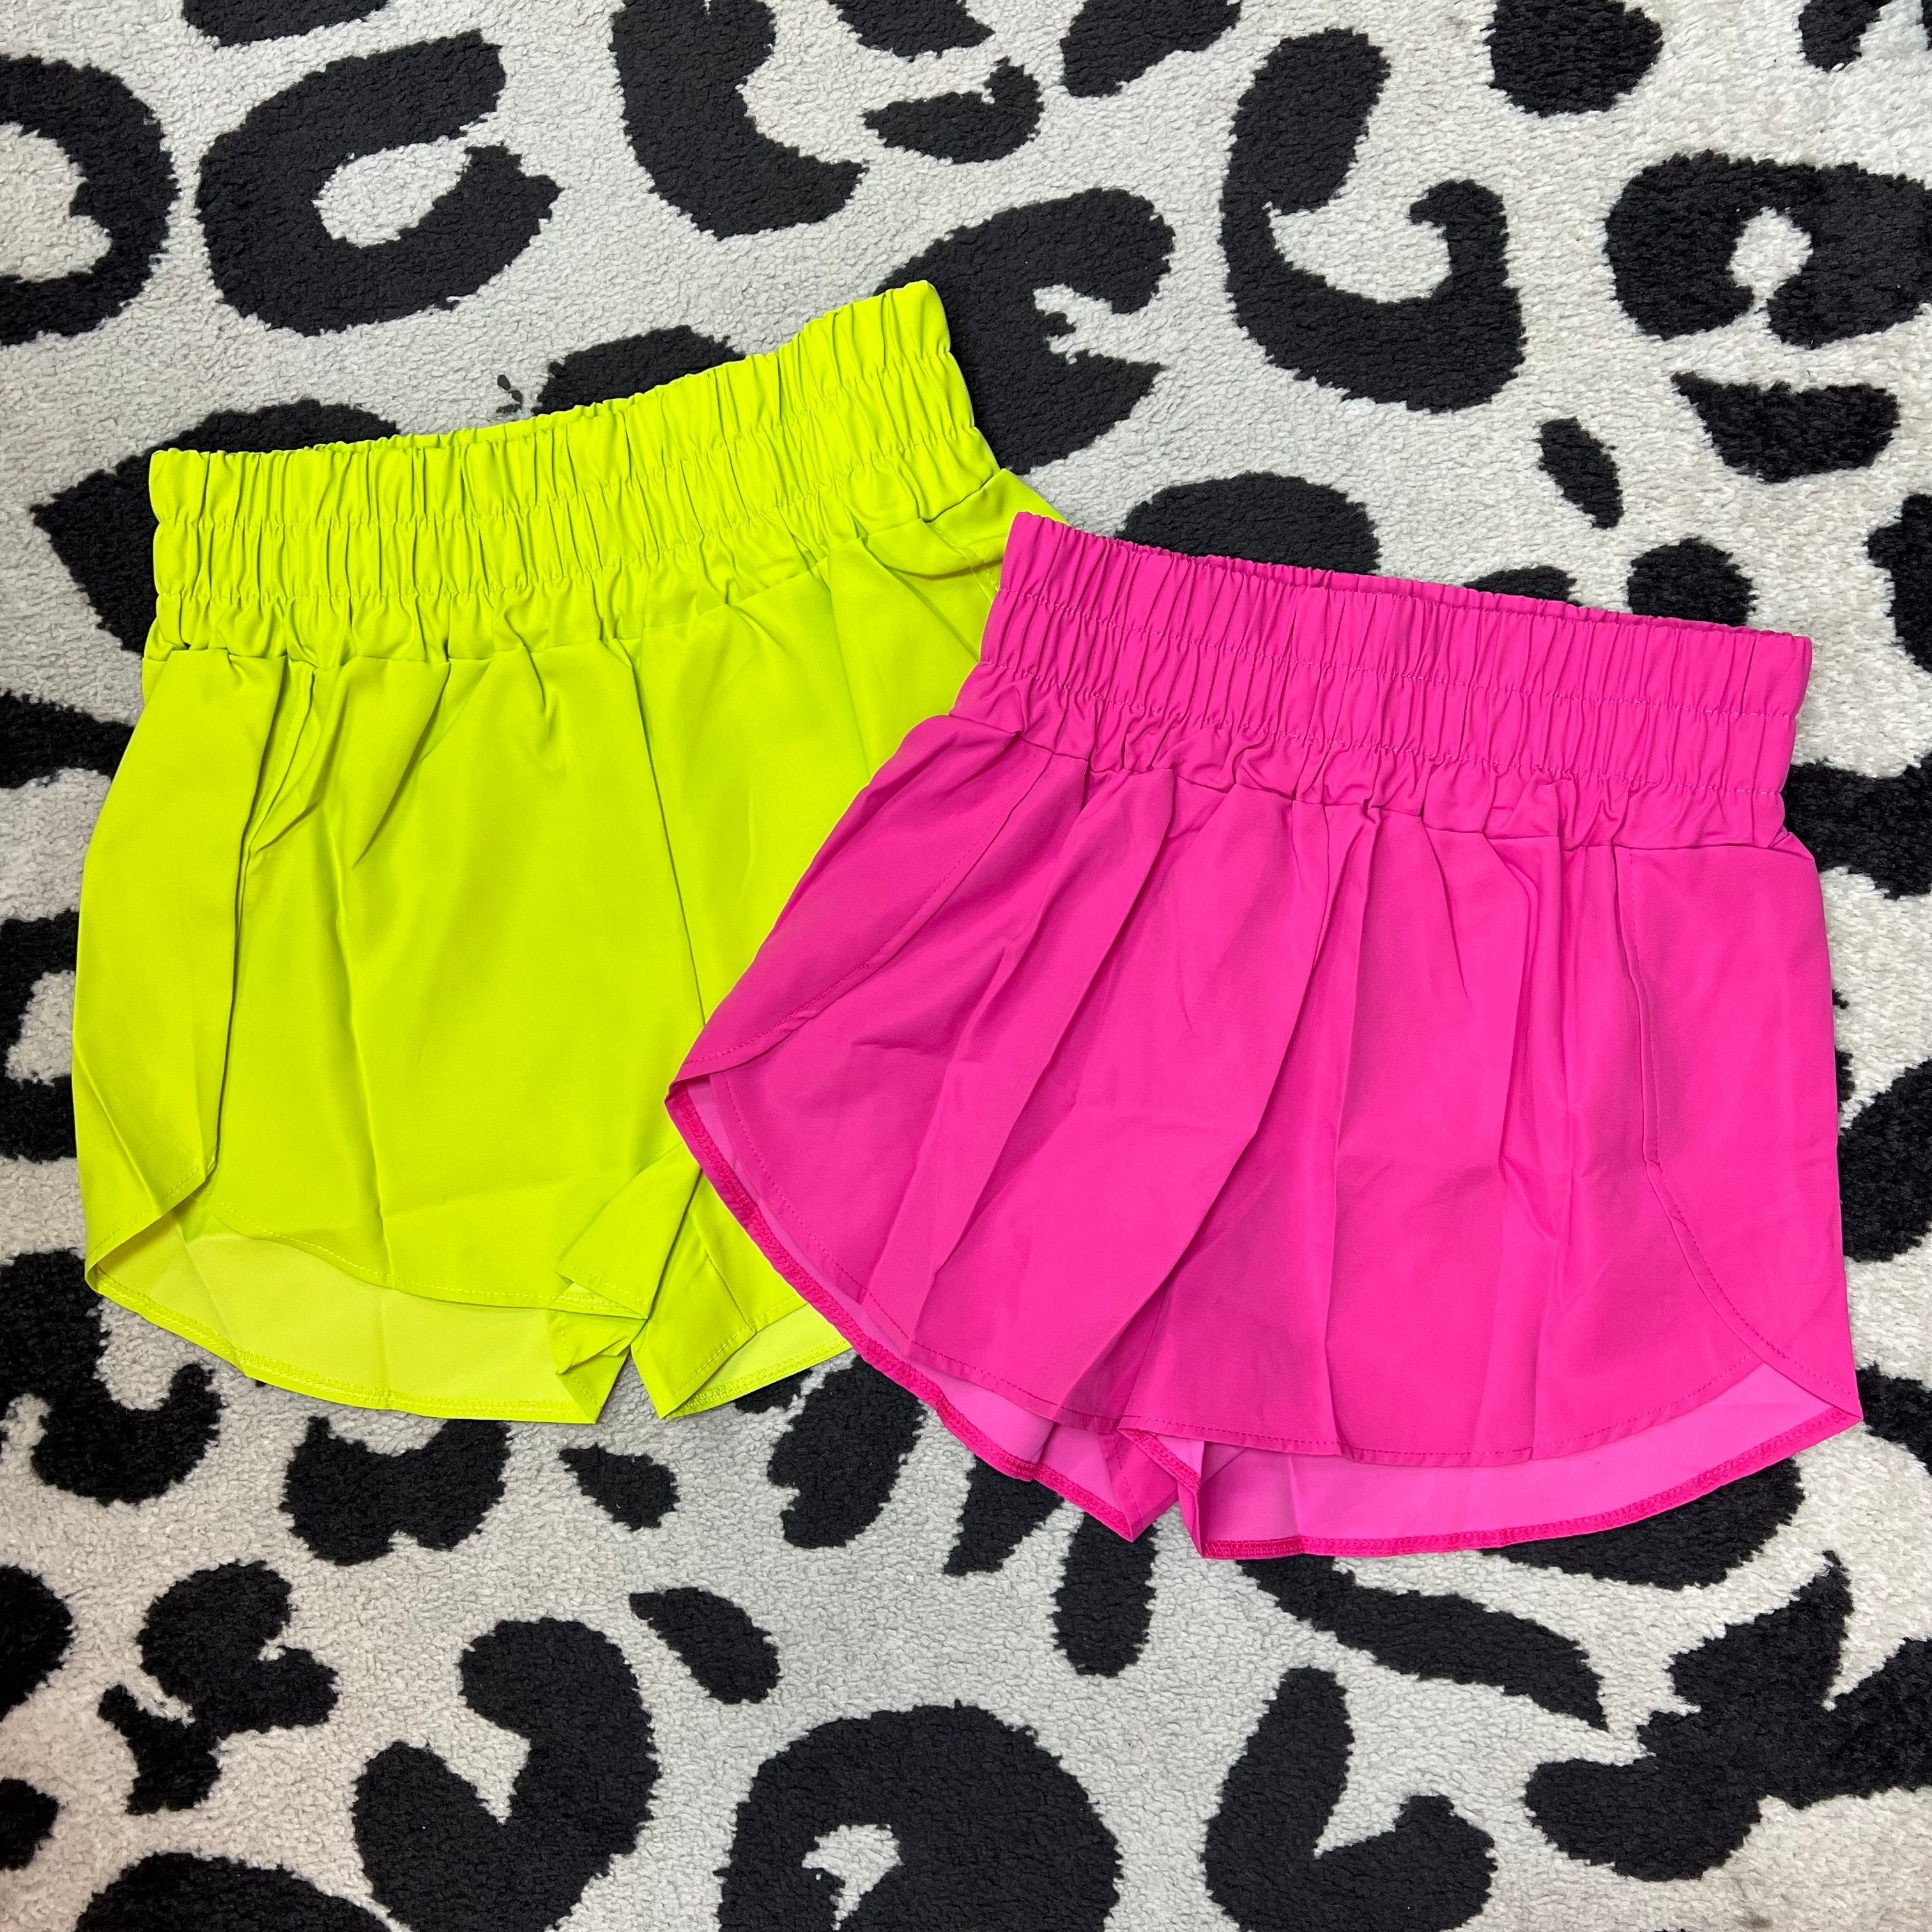 Neon Athletic Shorts